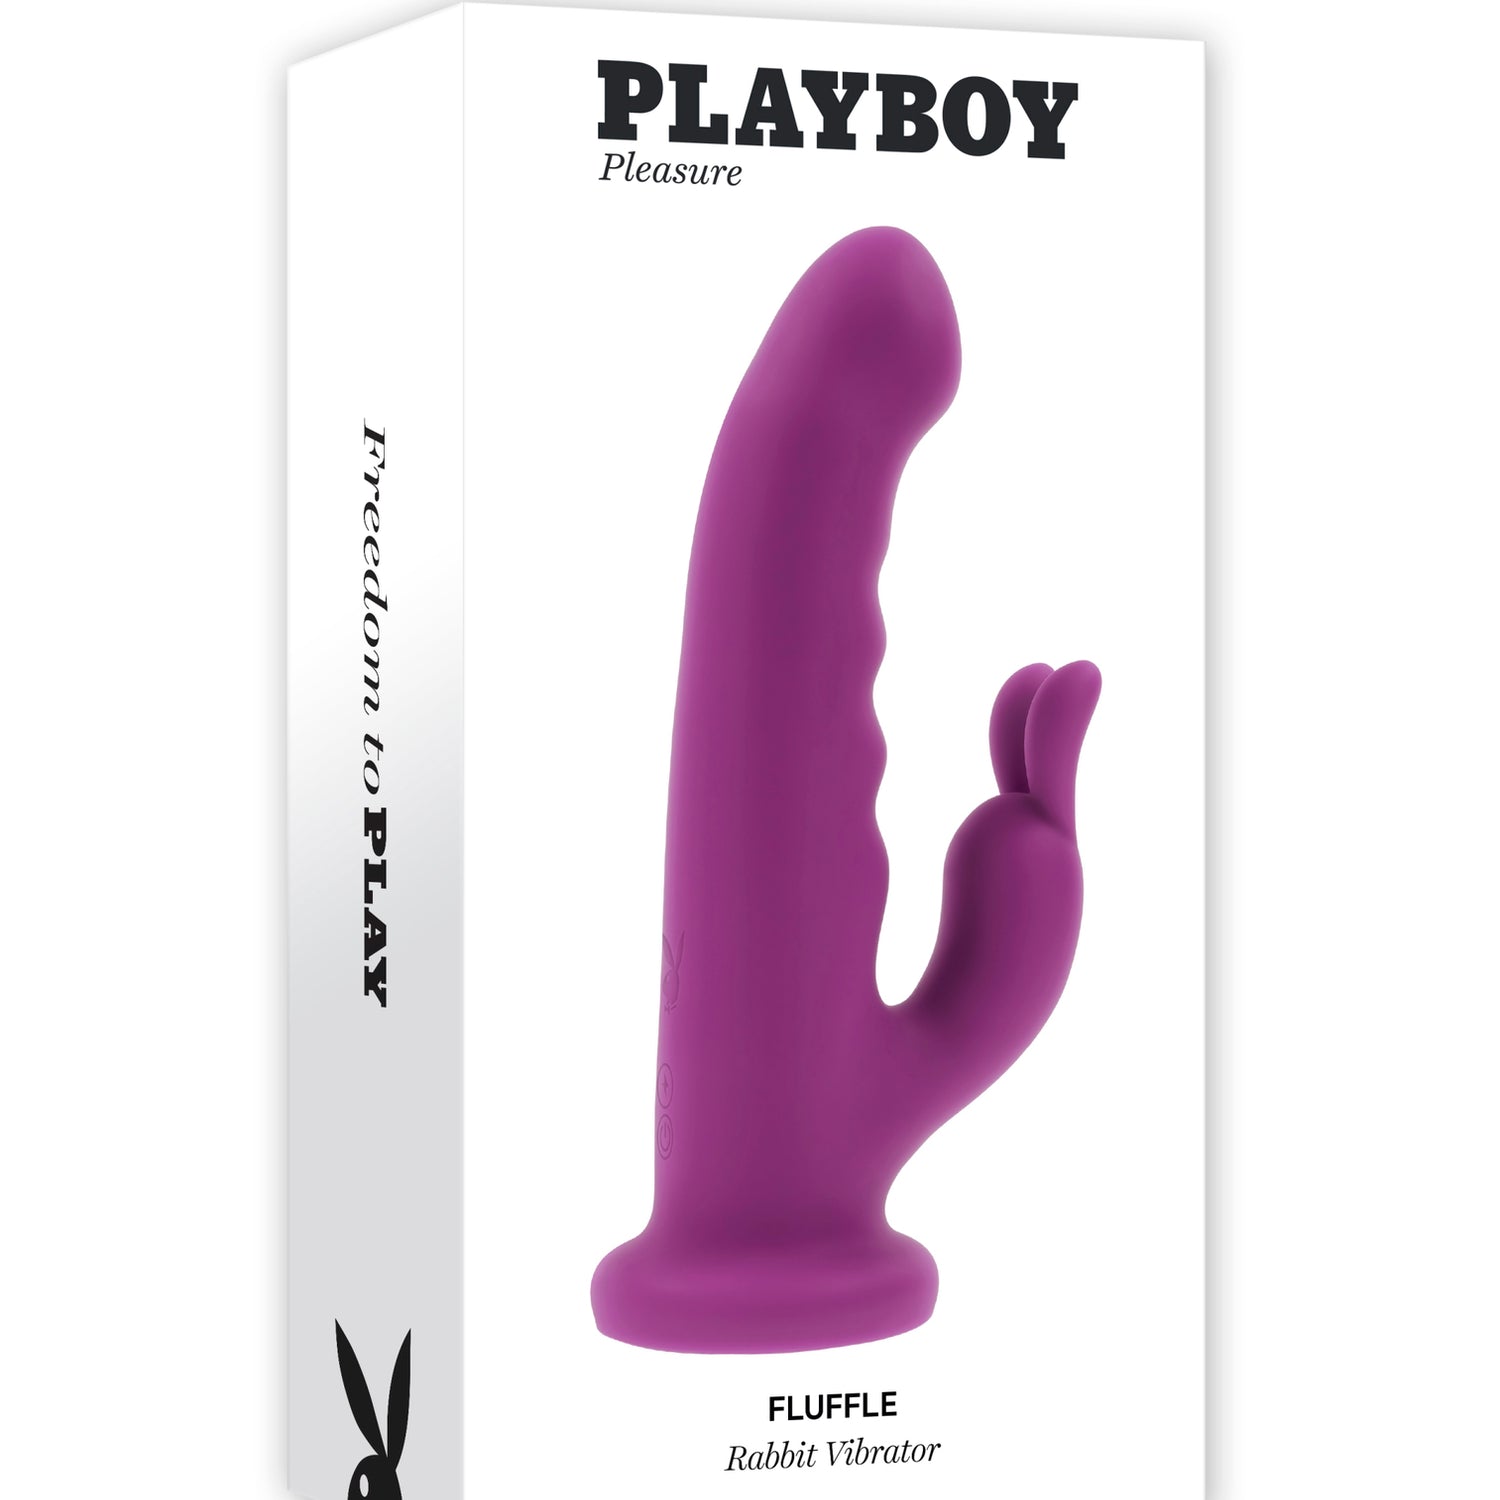 Playboy Fluffle